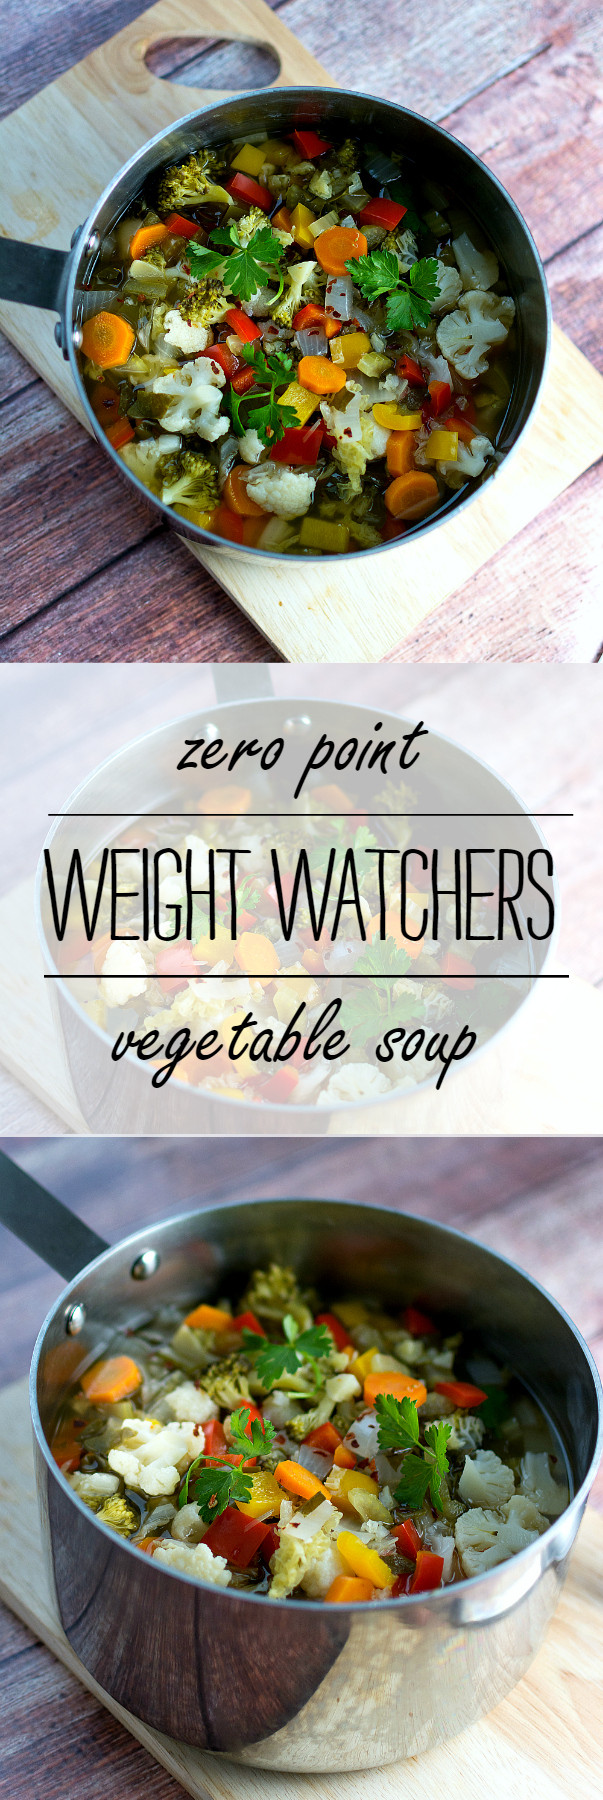 Vegan Weight Watchers Recipes
 Weight Watchers Recipe for Soup